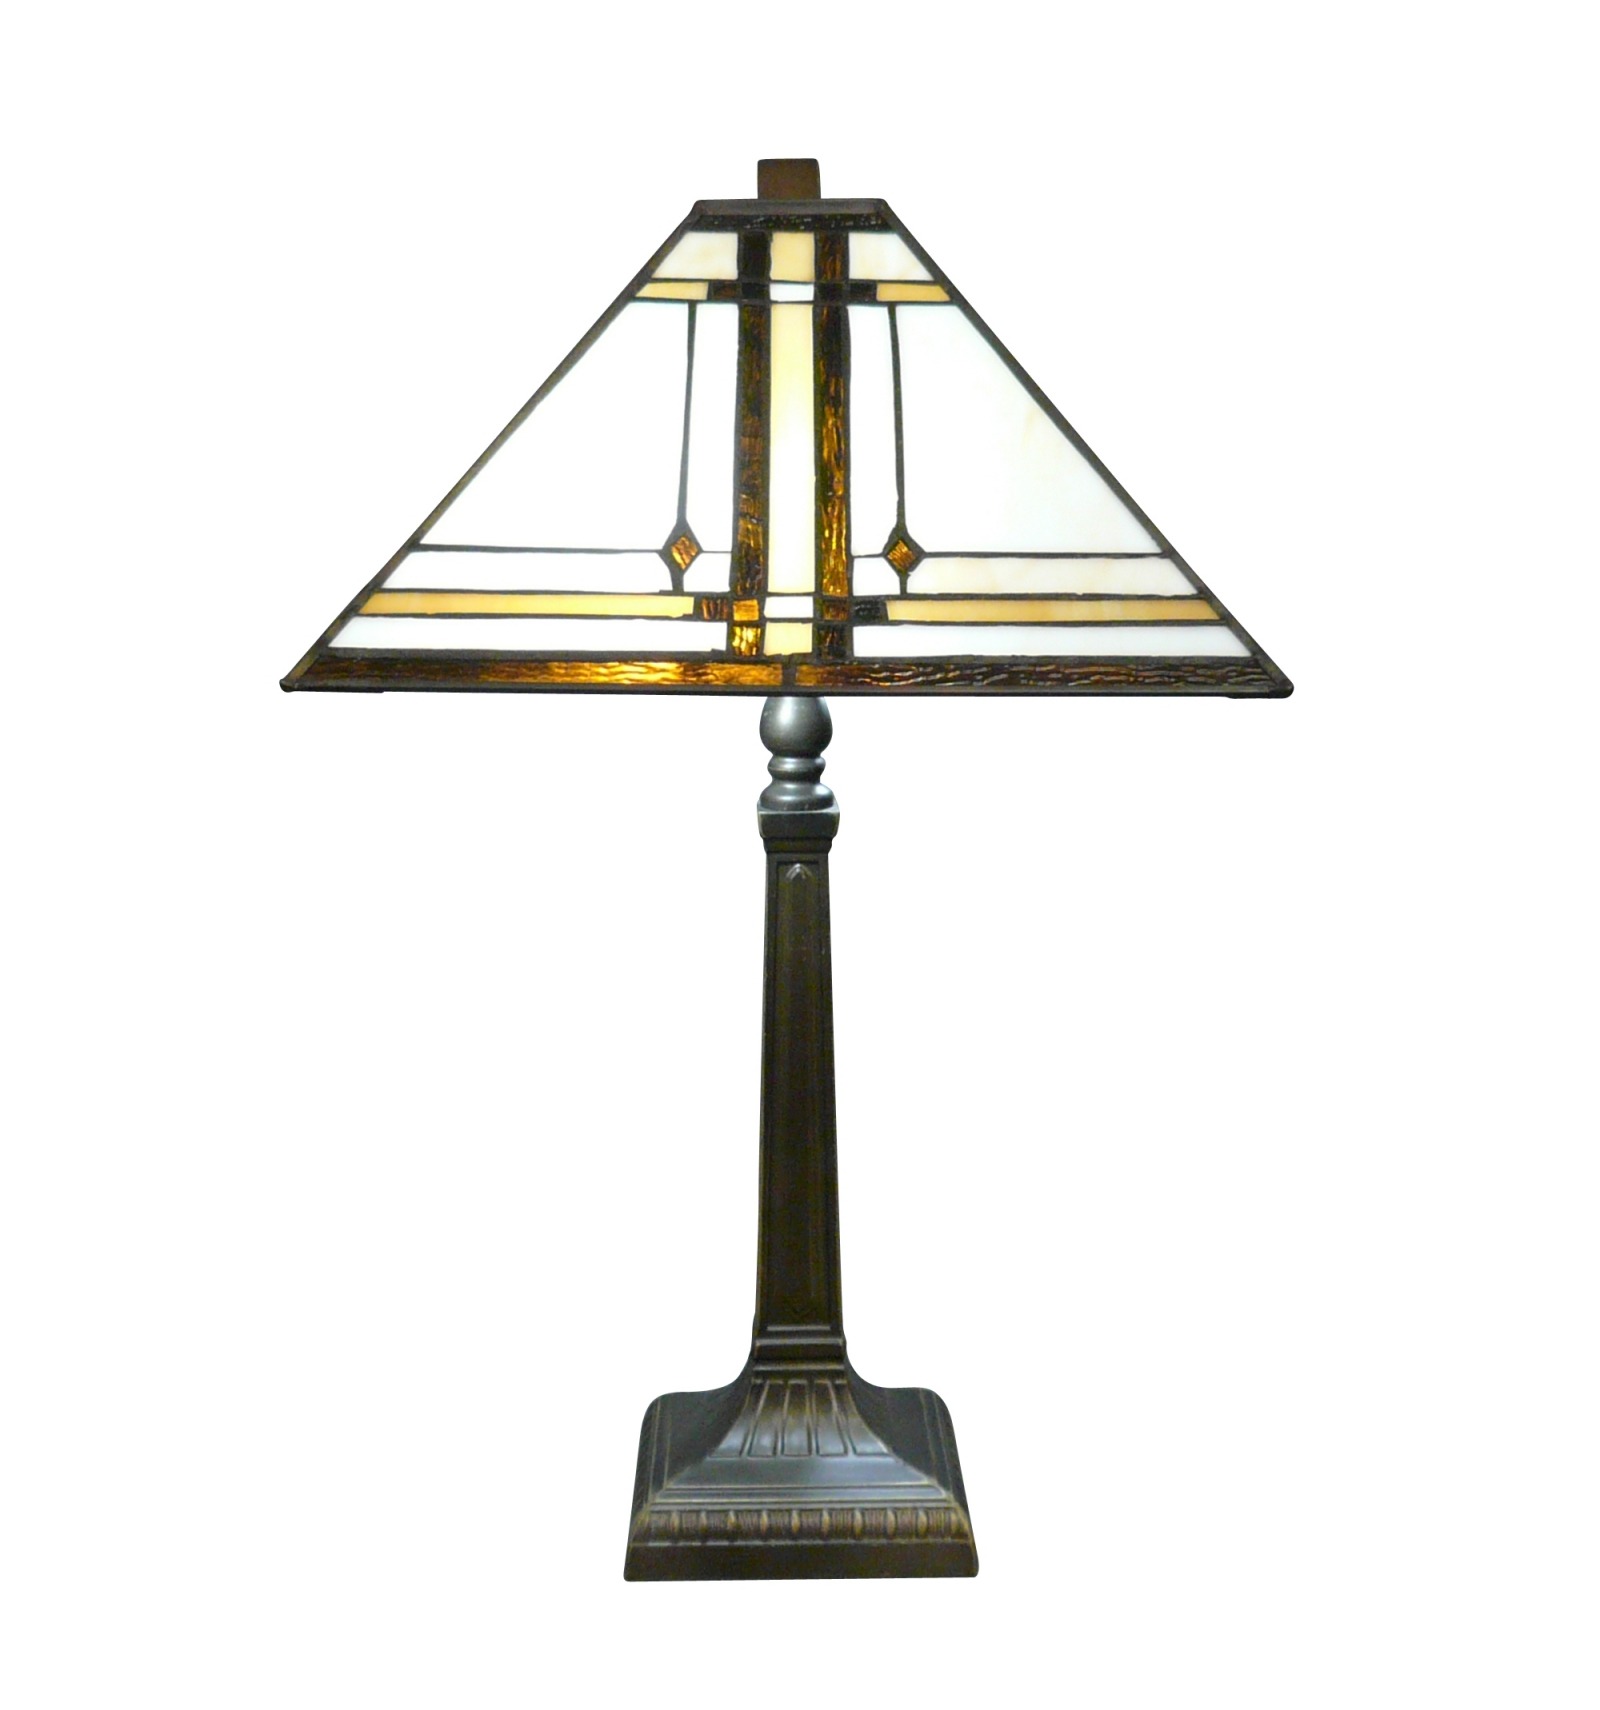 Thespian gelei Sterkte Tiffany tafellamp lamp Art Deco - Tiffany lampen outlet